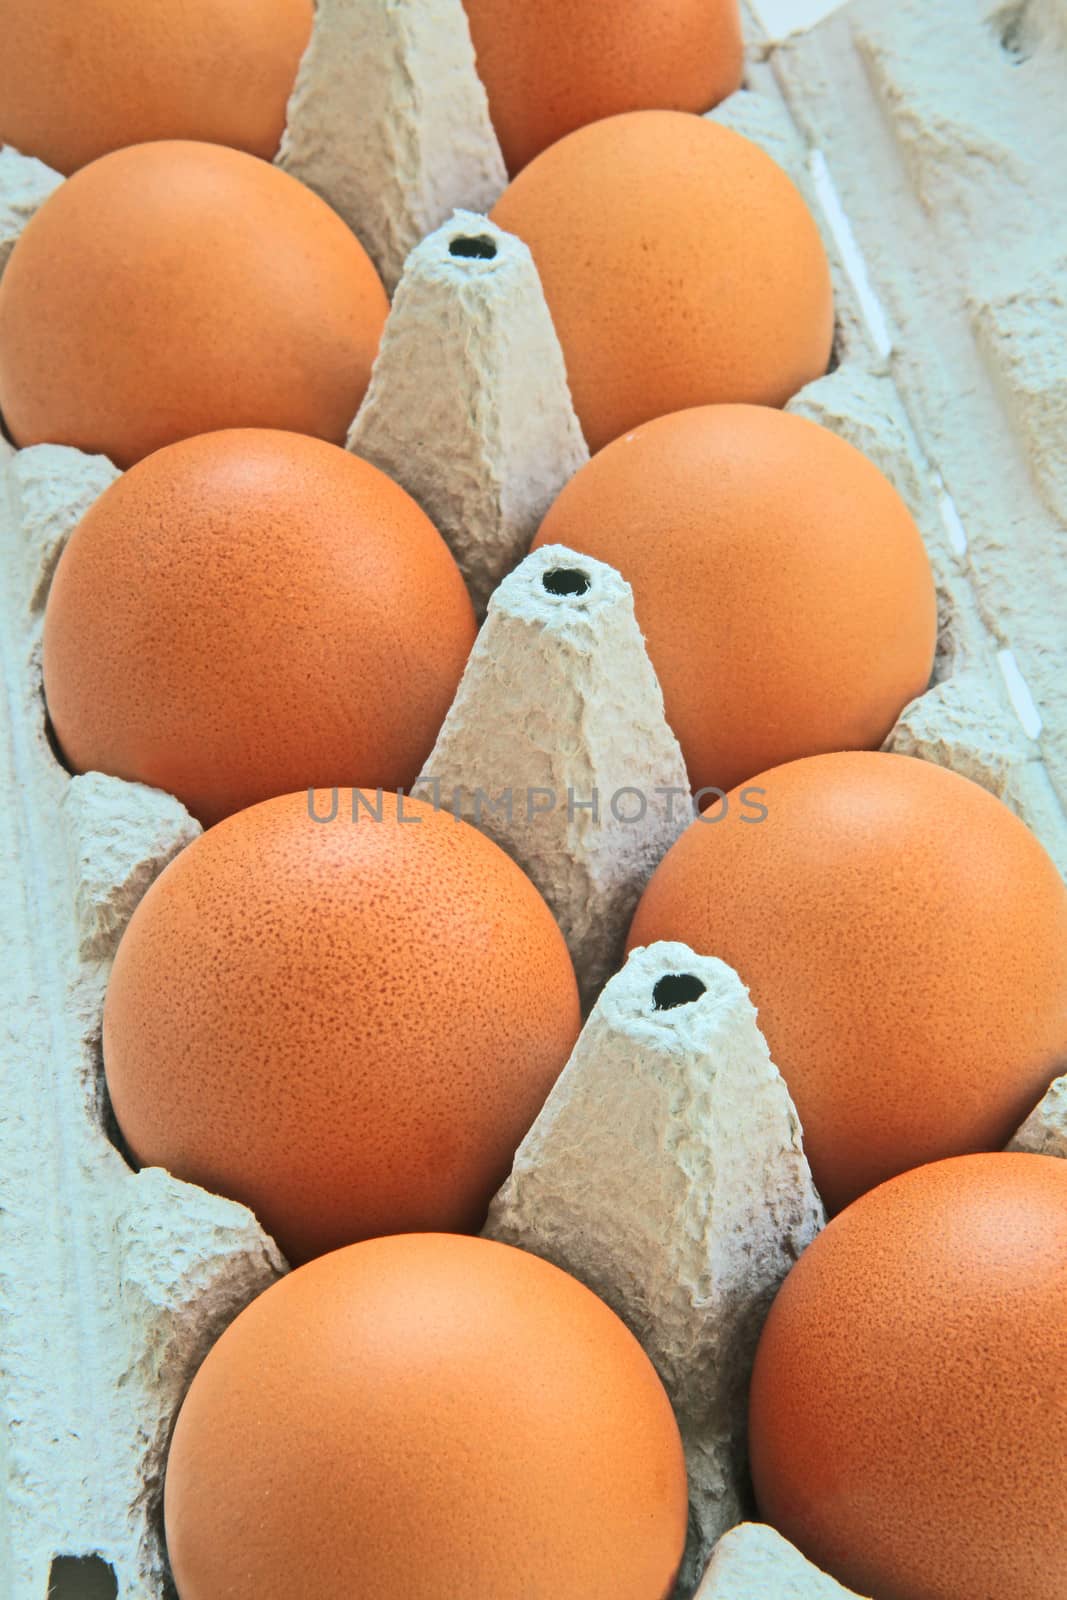 eggs in a paper box